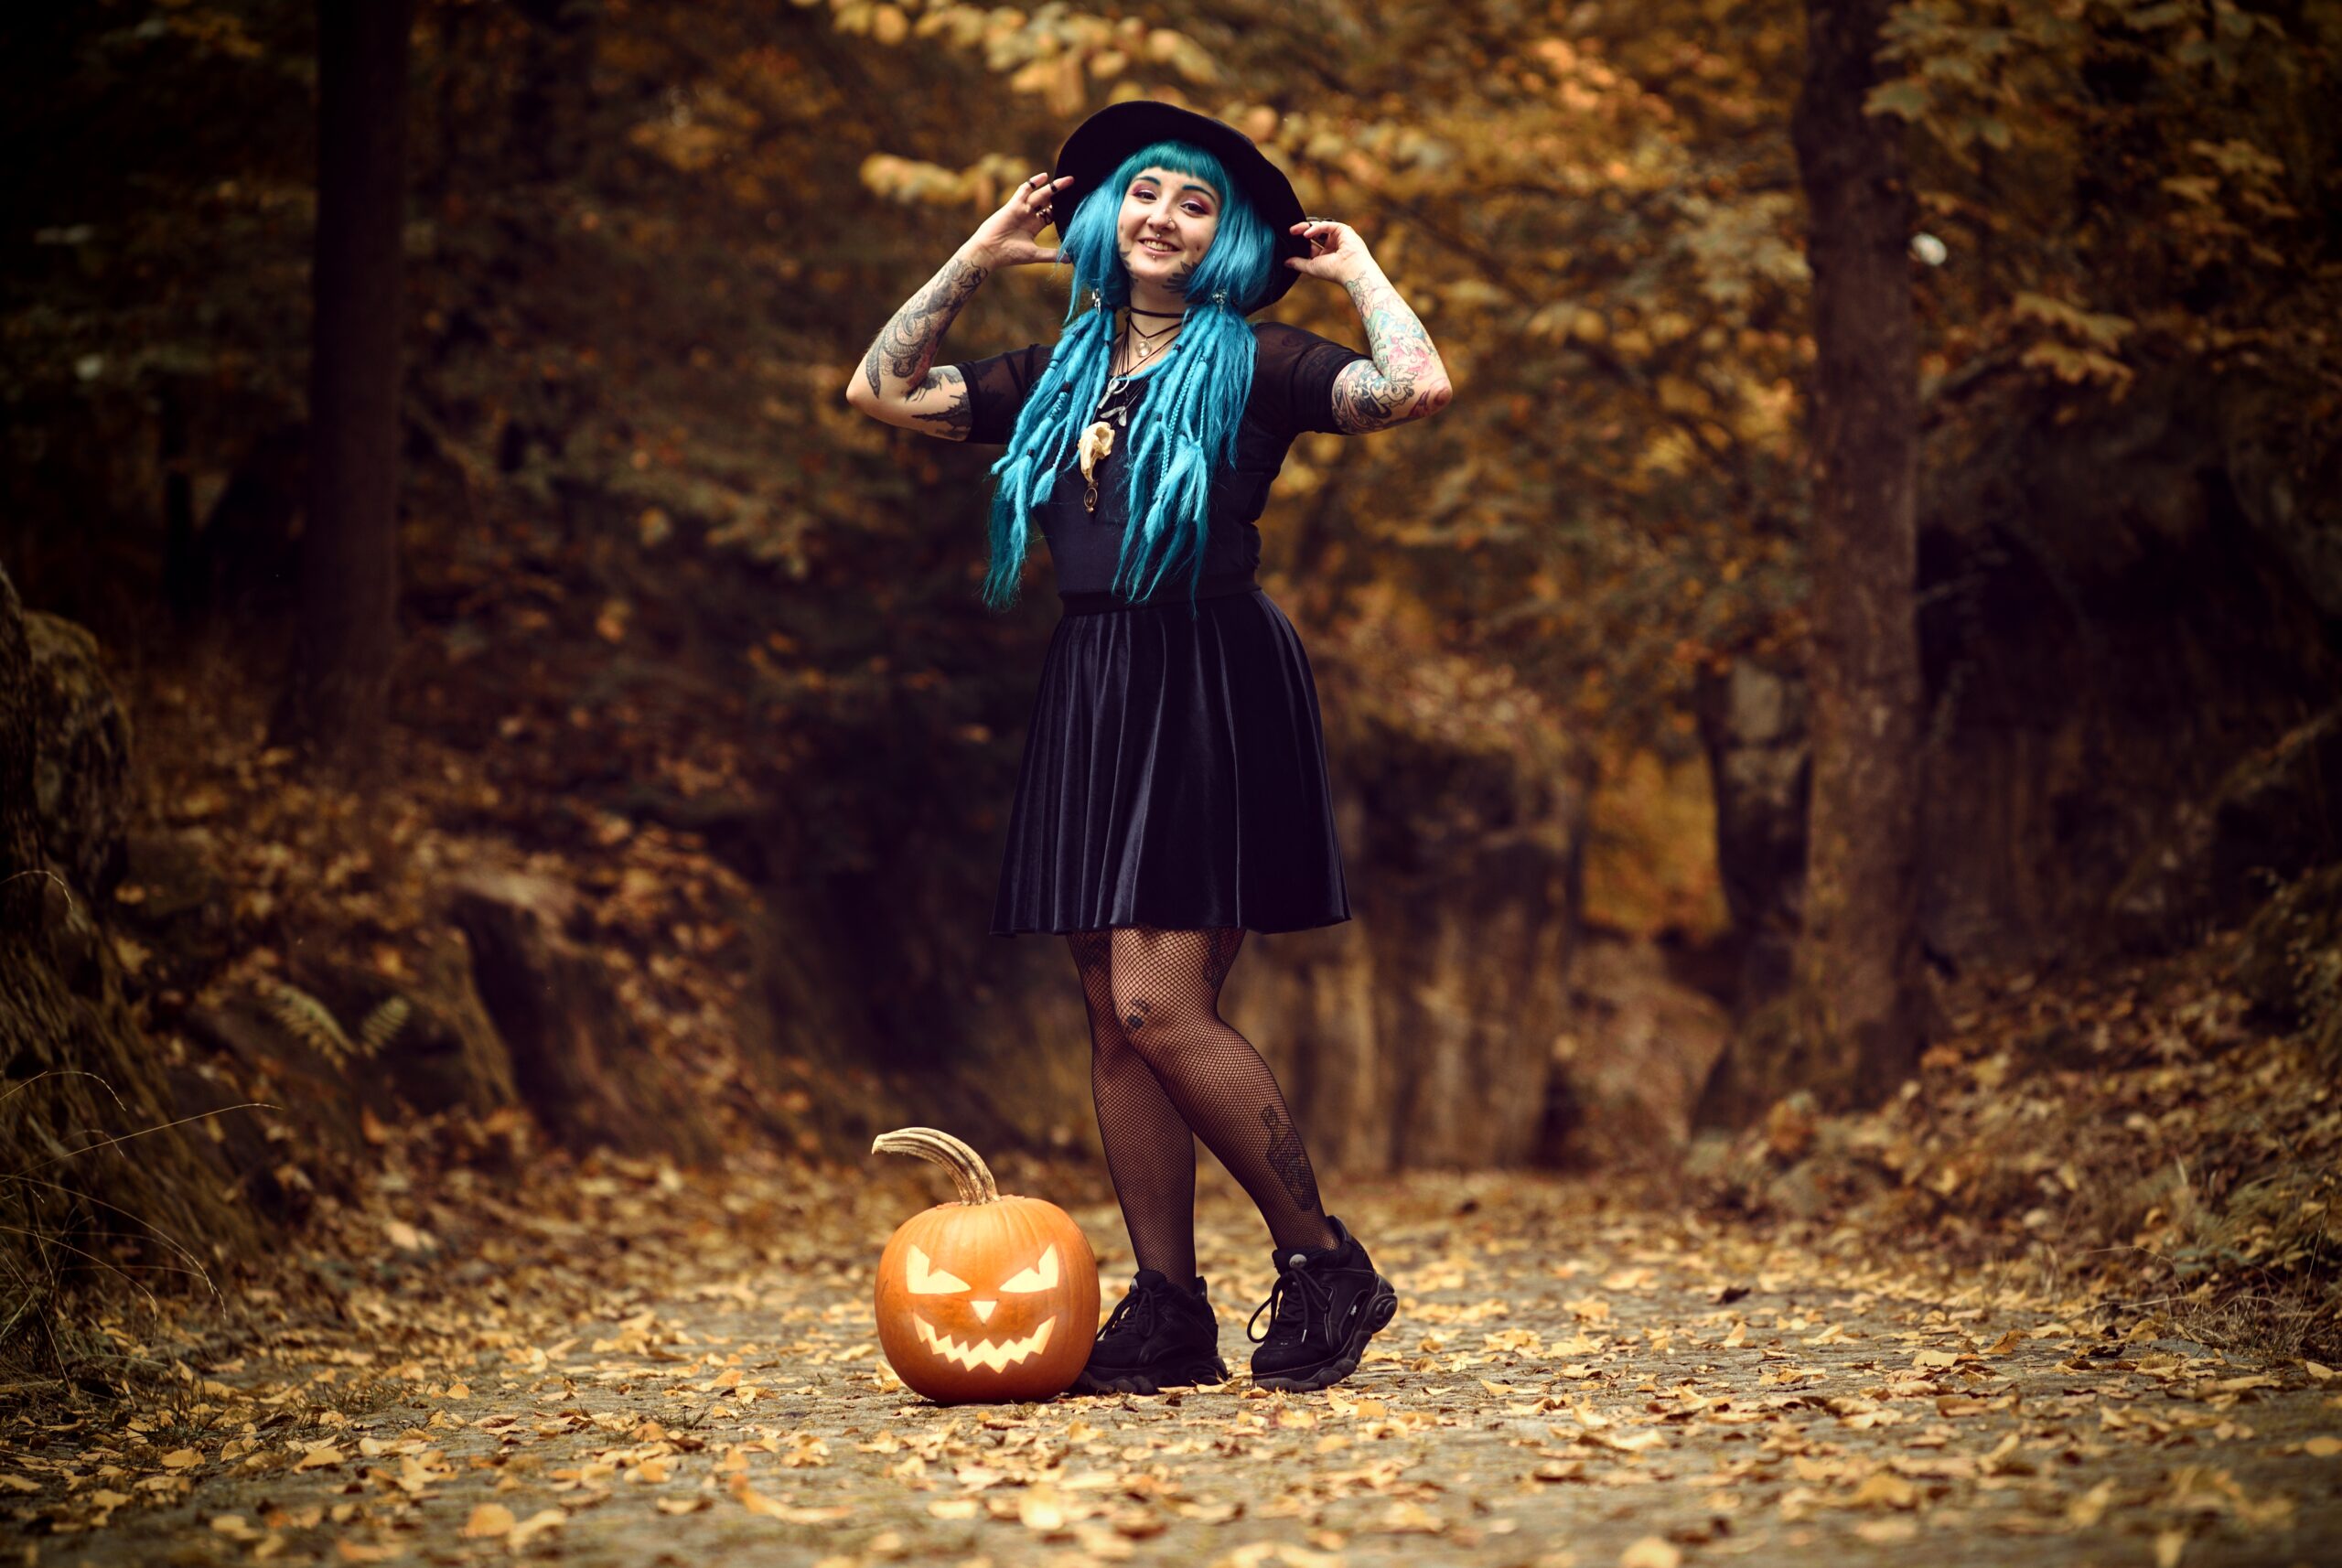 Halloween-inspirierte Fotografie